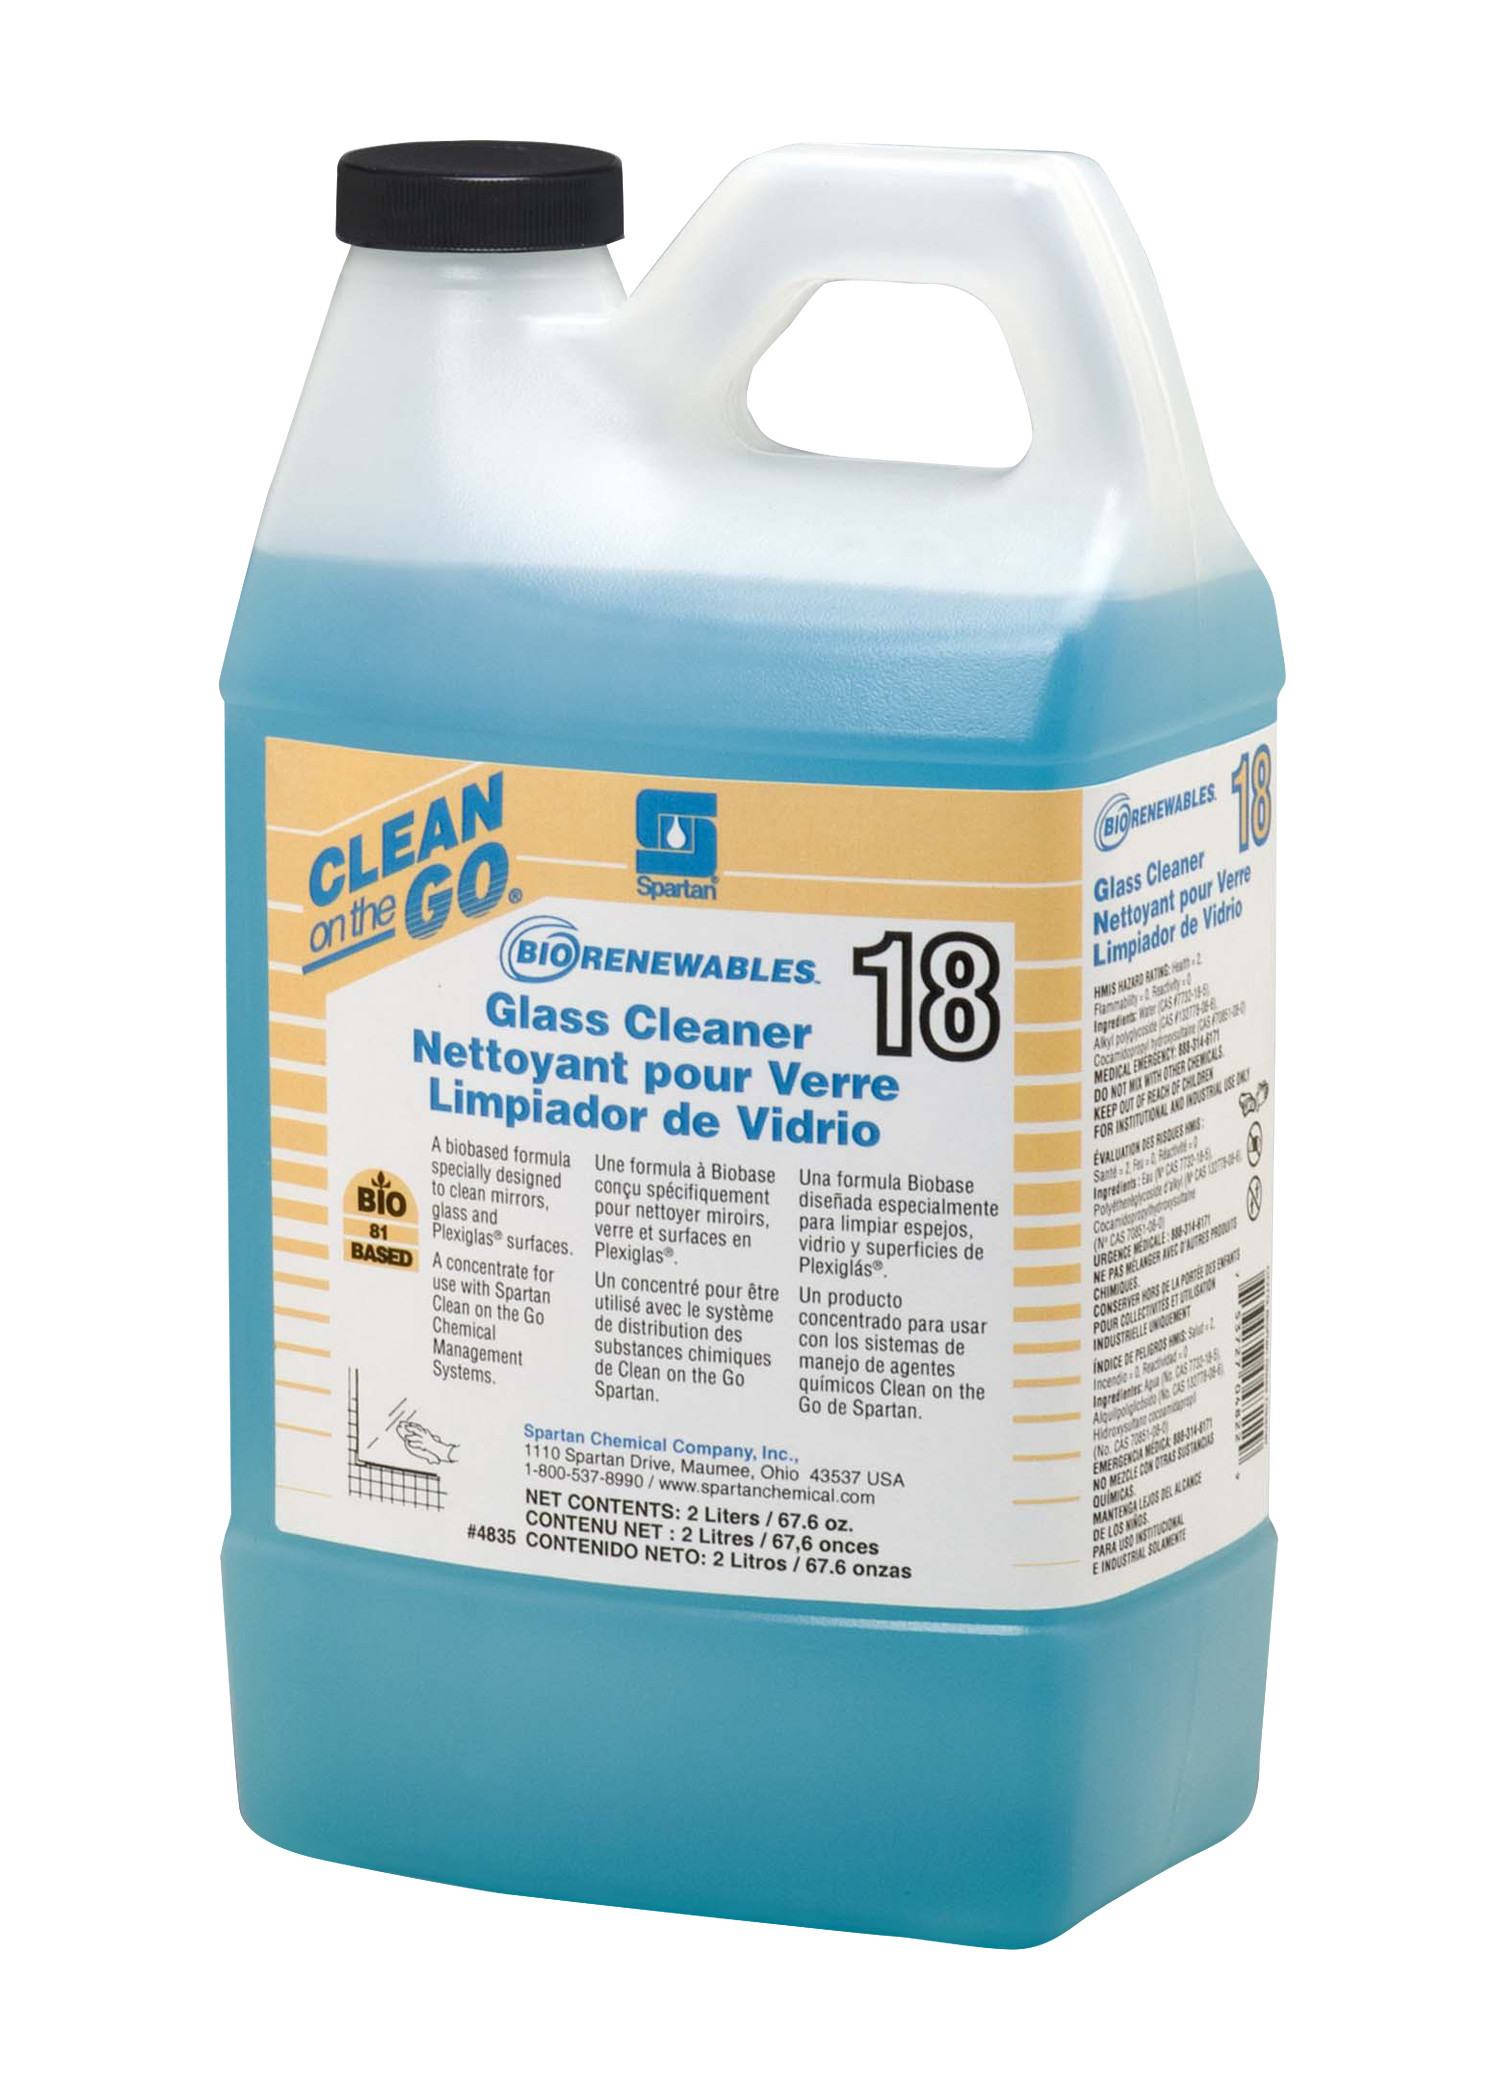 Spartan Chemical Company BioRenewables Glass Cleaner 18, 2 LITER 4/CS